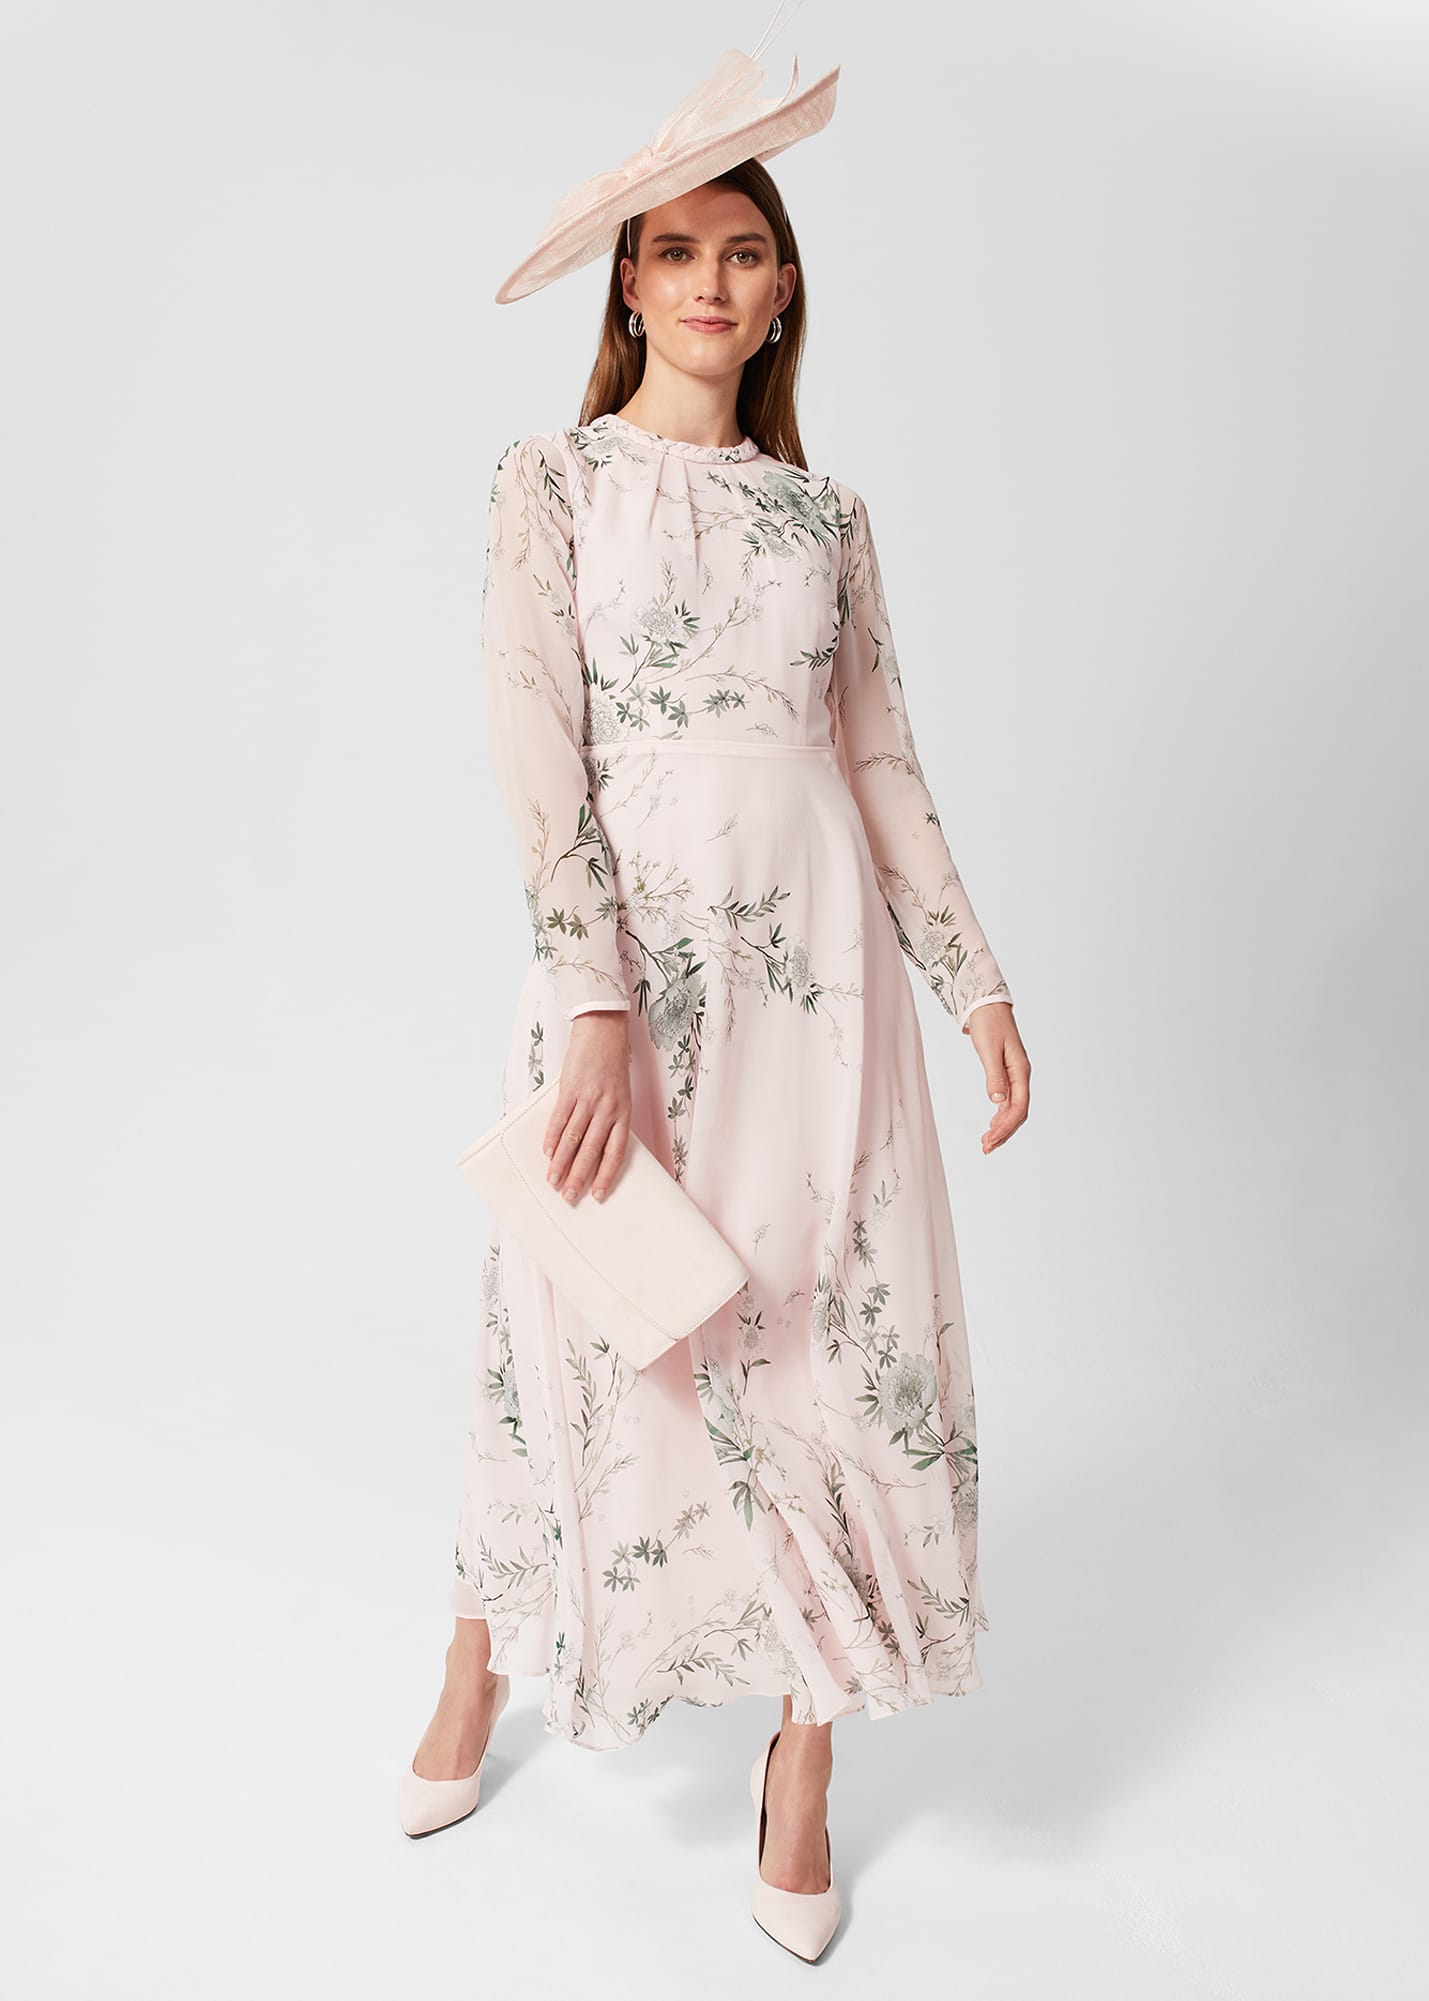 Hobbs Women's Rosabelle Silk Floral Dress - Pale Pink Multi